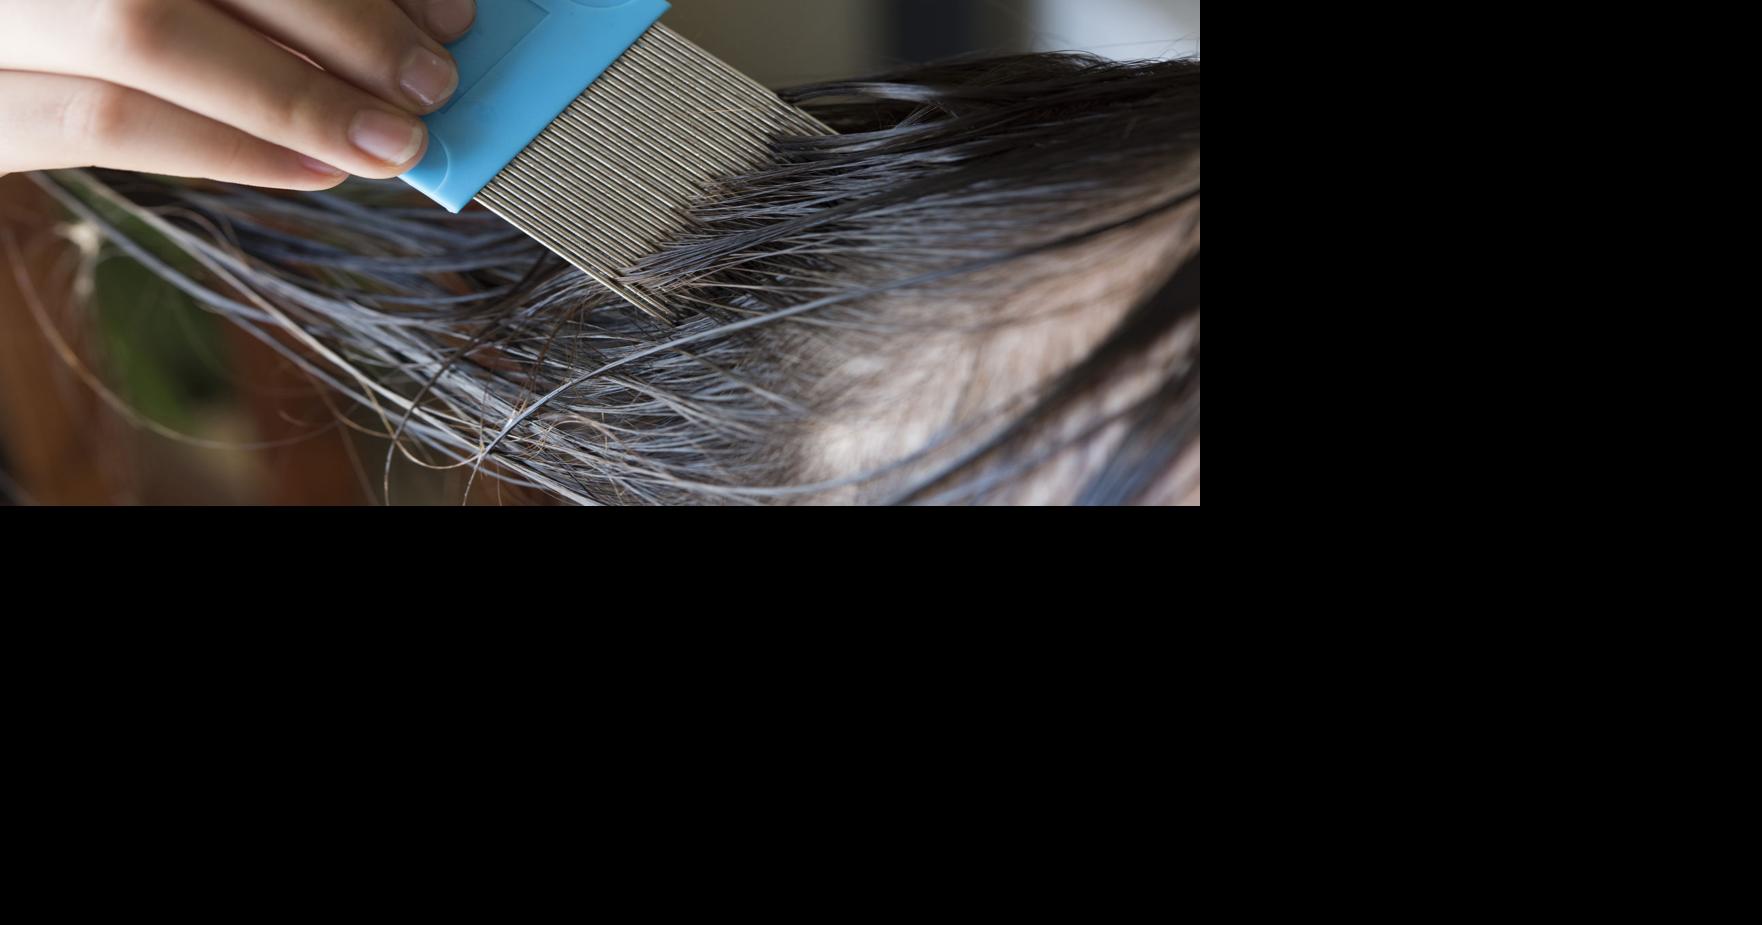 Parents beware: New OTC-resistant lice detected in hair